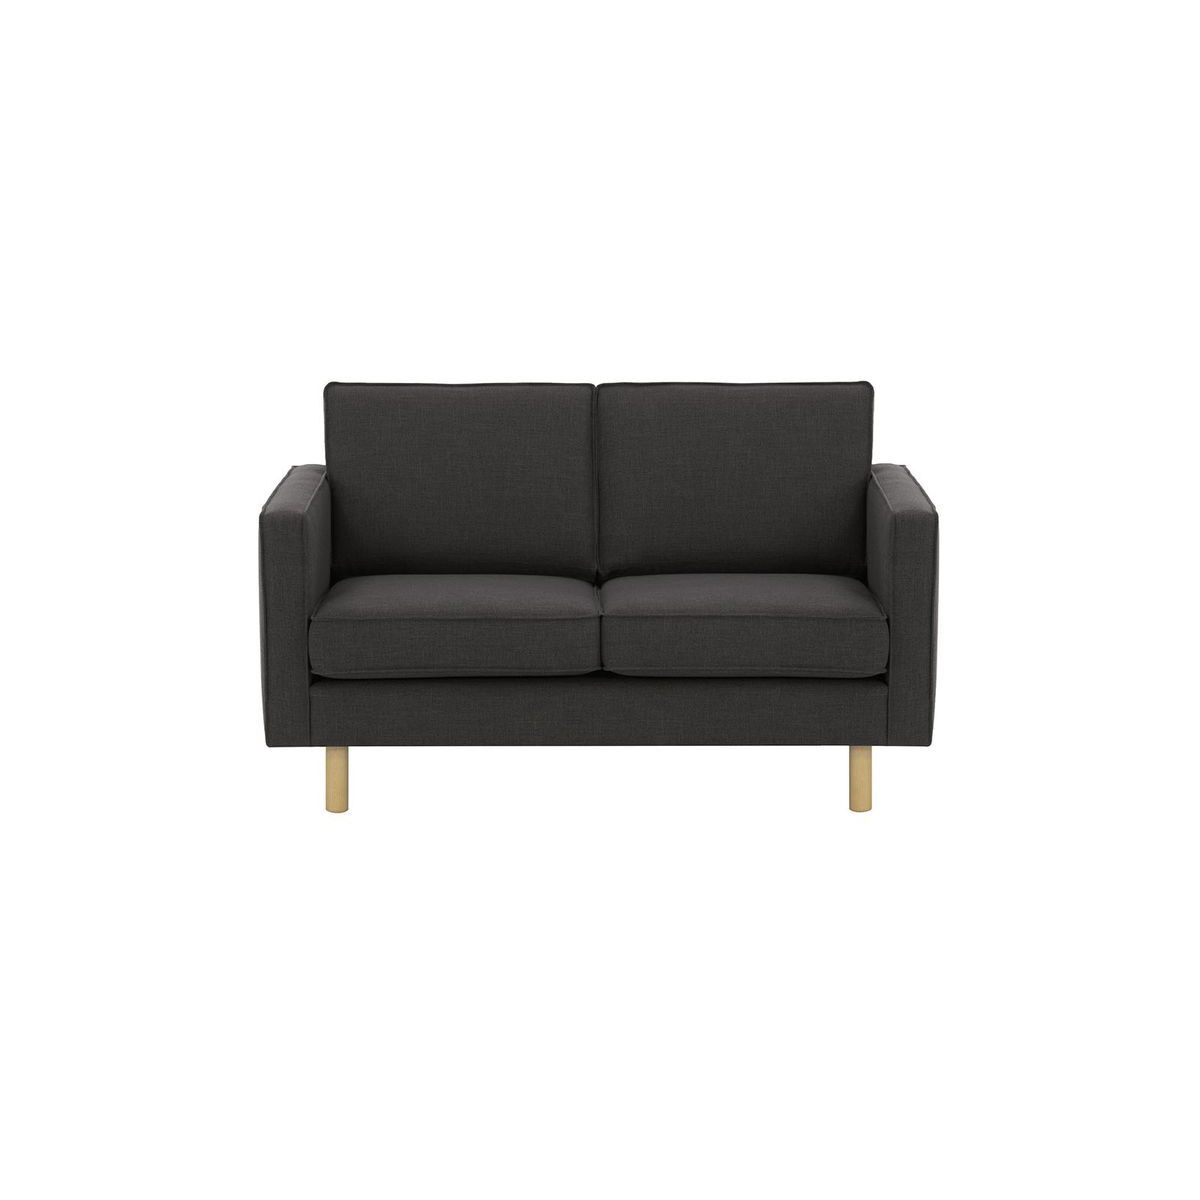 Coco 2 Seater Sofa, dark grey - image 1